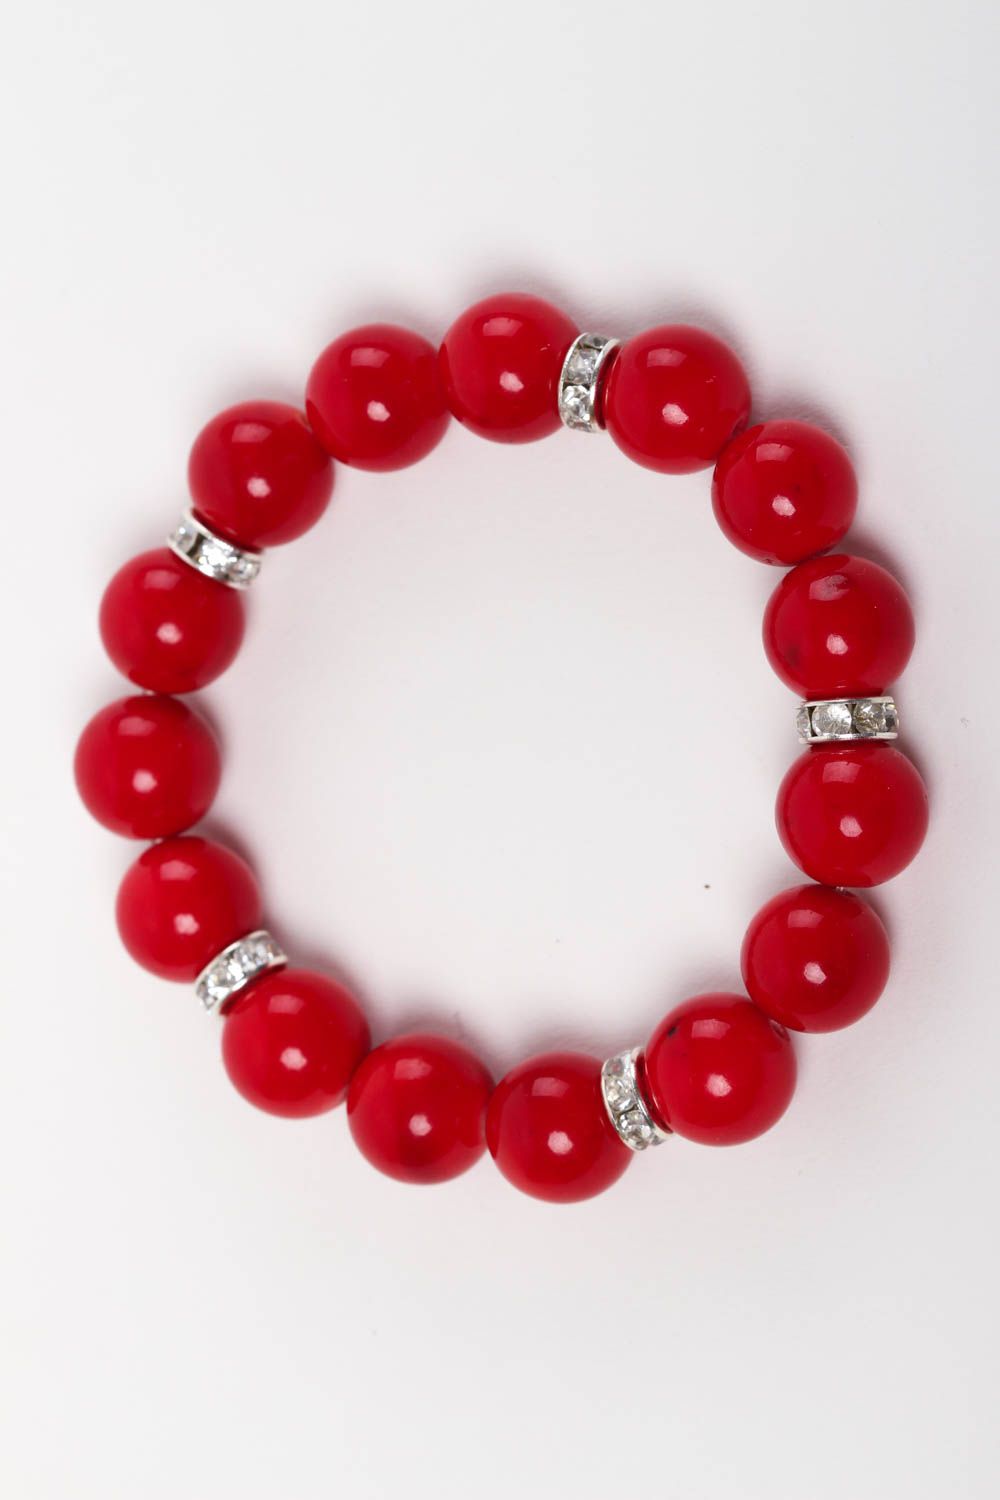 Designer bracelet handmade coral bracelet jewelry with natural stones for women photo 2